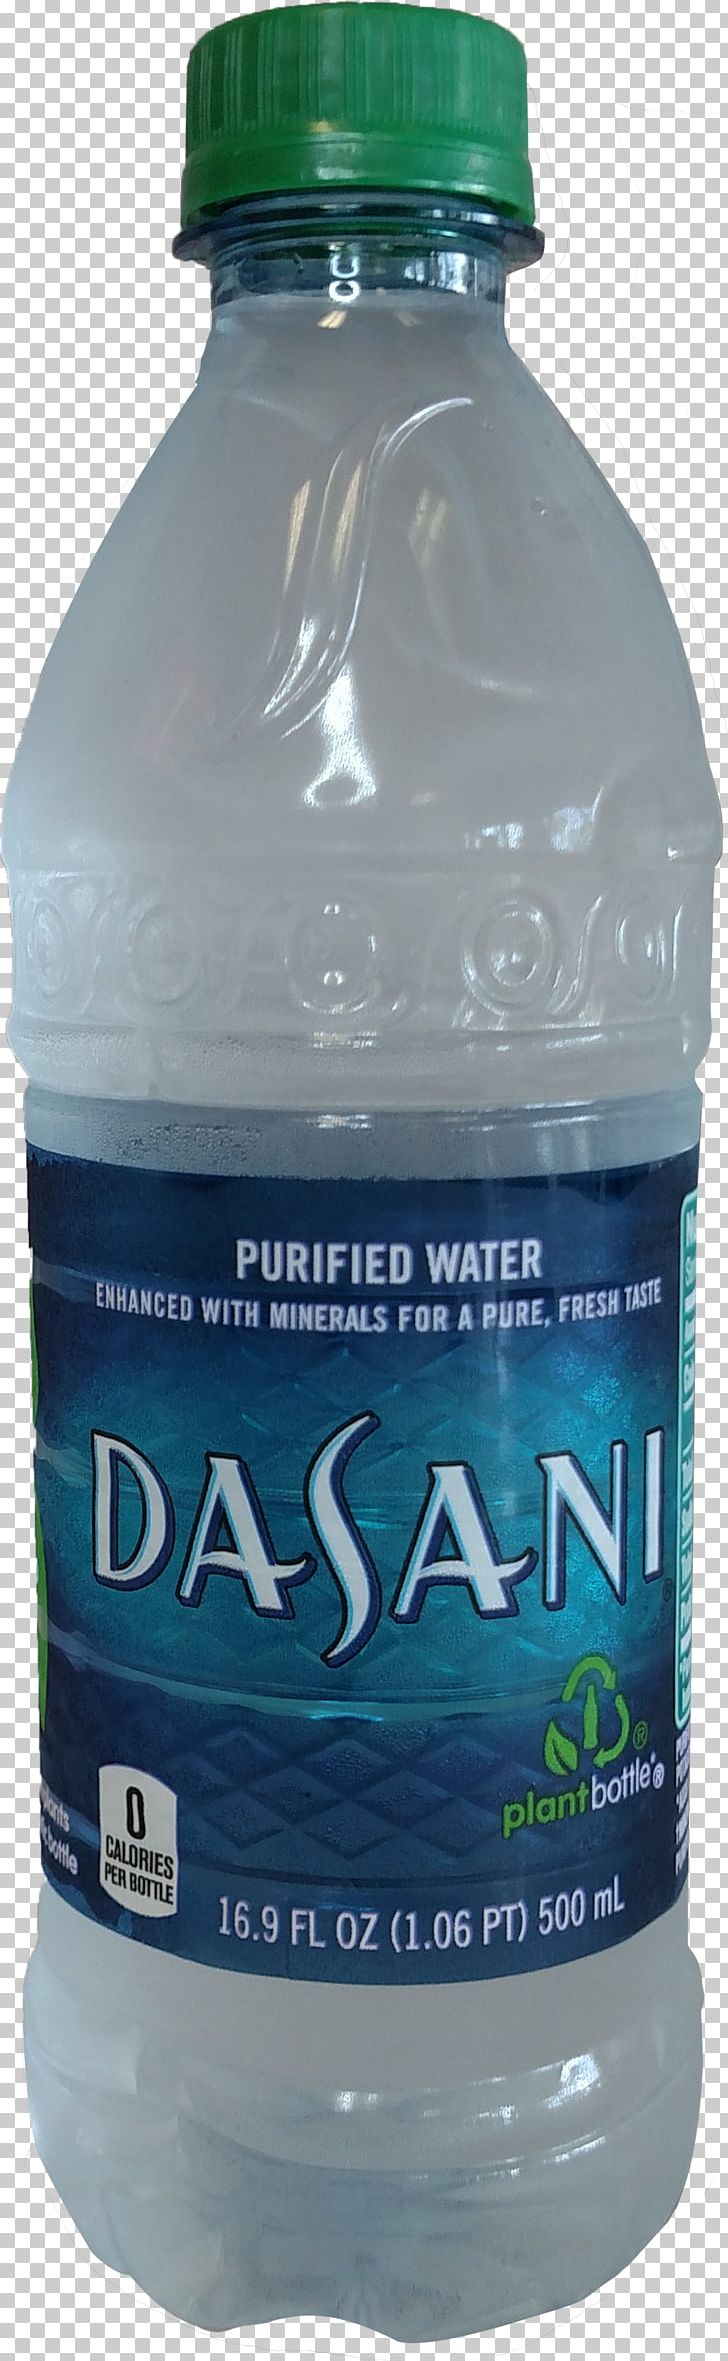 Water Bottles Bottled Water Dasani PNG, Clipart, Bottle, Bottled Water, Cherry Coke, Dasani, Distilled Water Free PNG Download